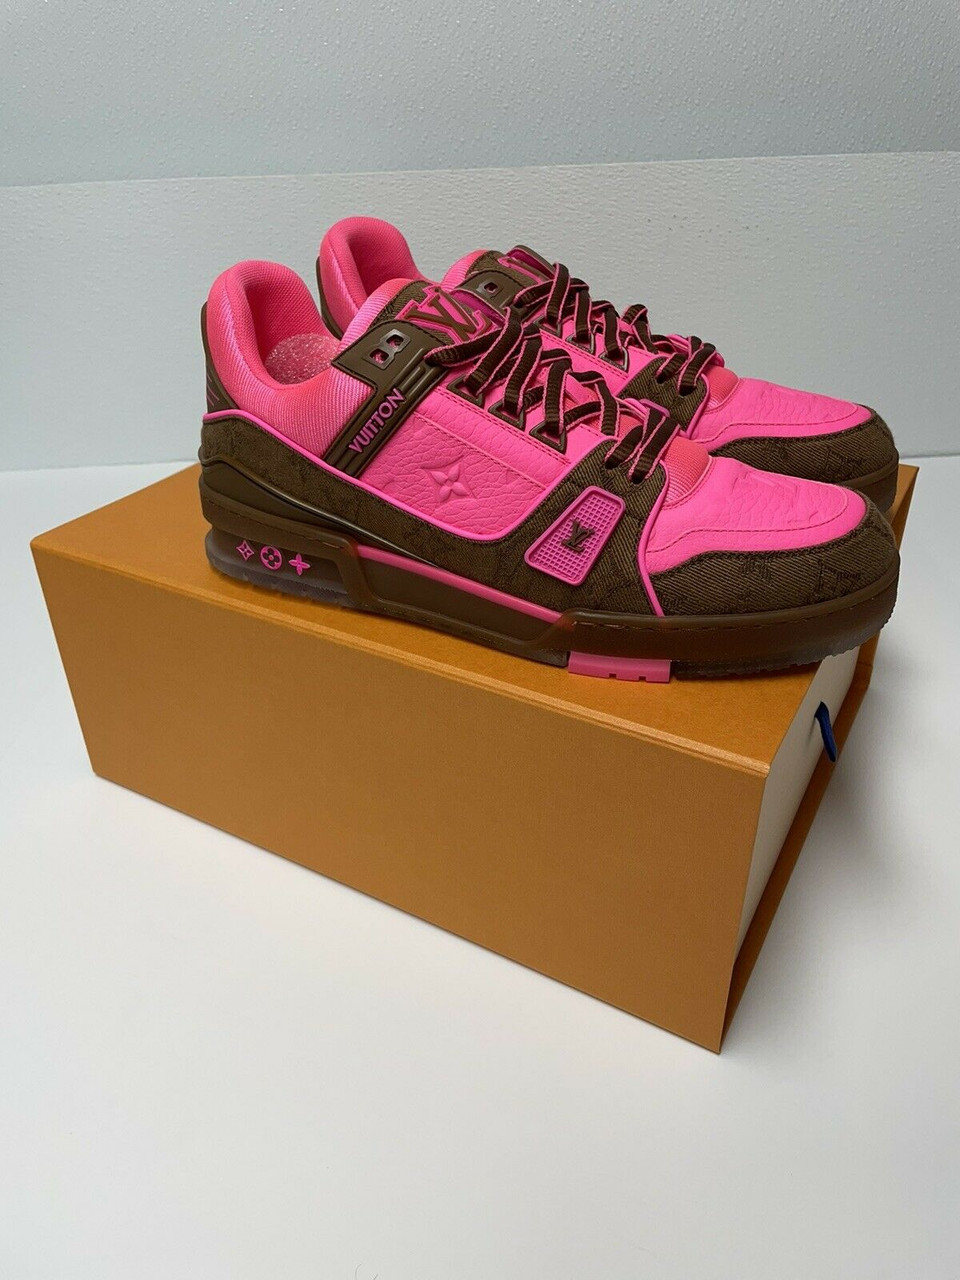 LOUIS VUITTON Crystal Mens LV Trainer Sneakers 9.5 Pink Brown 1014298